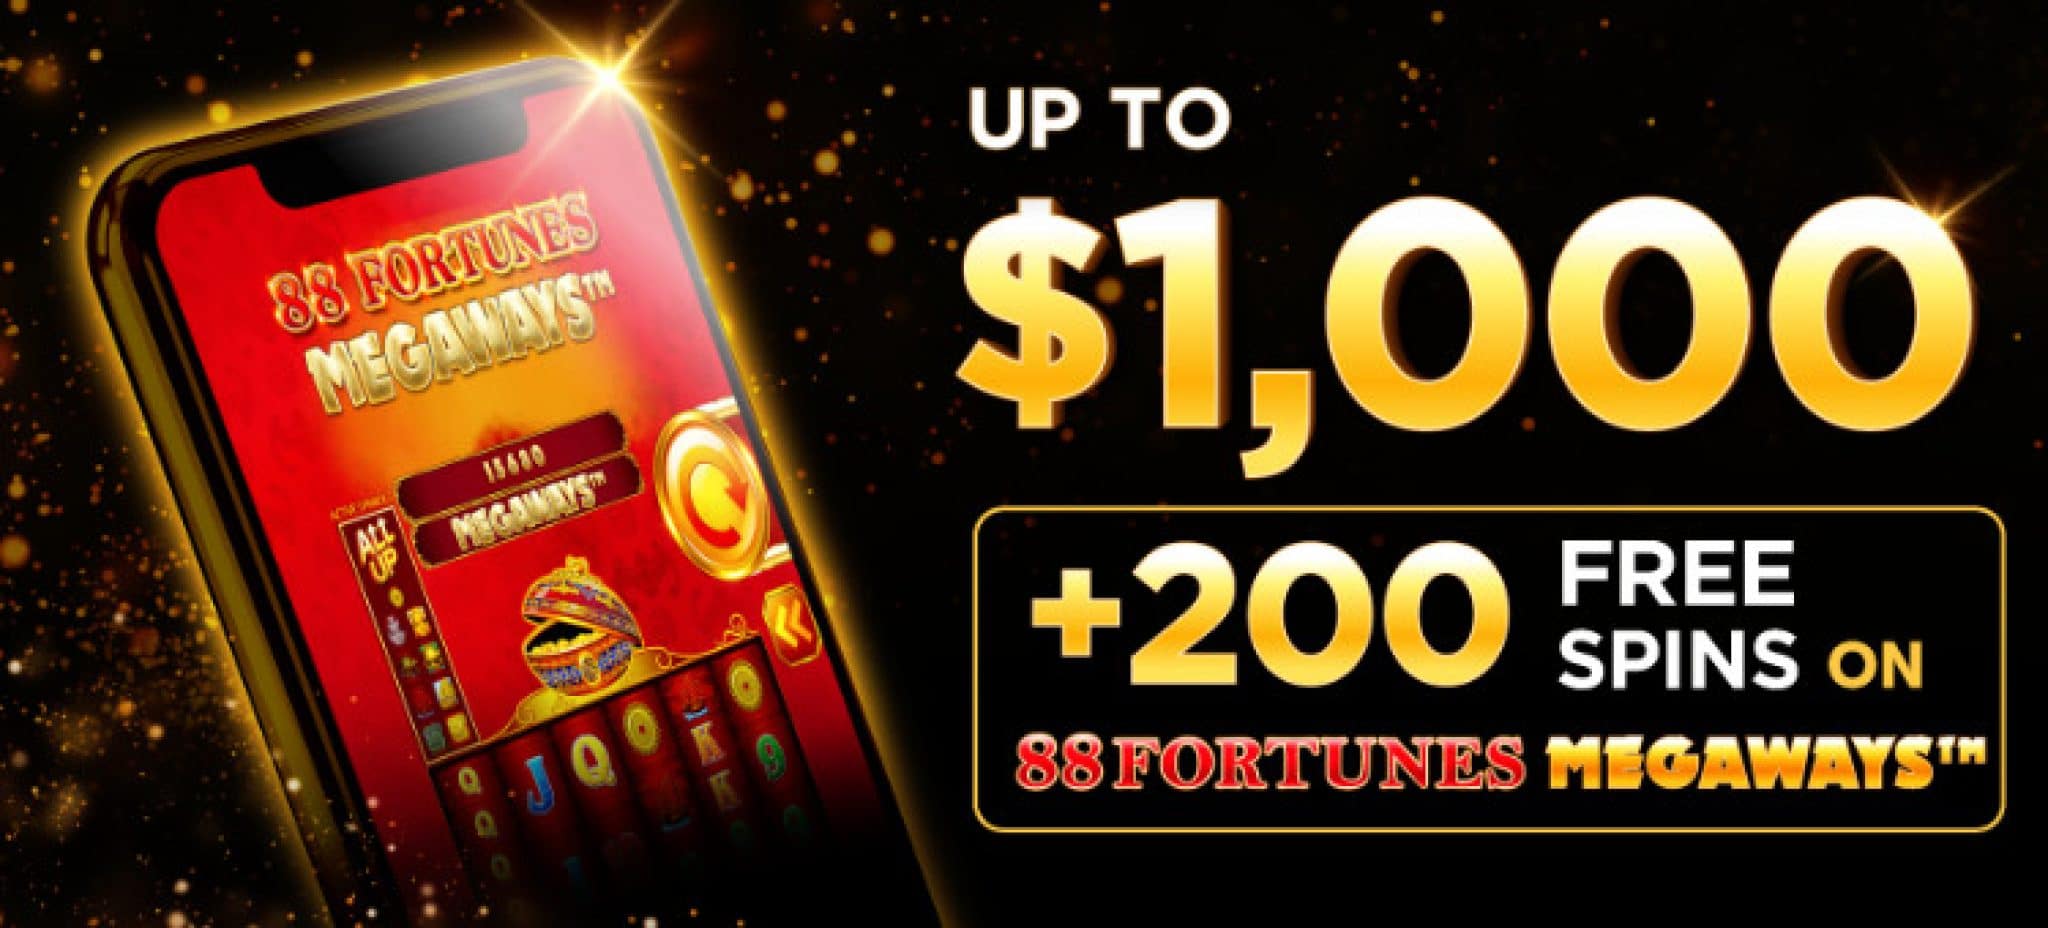 Golden Nugget Casino Online download the new